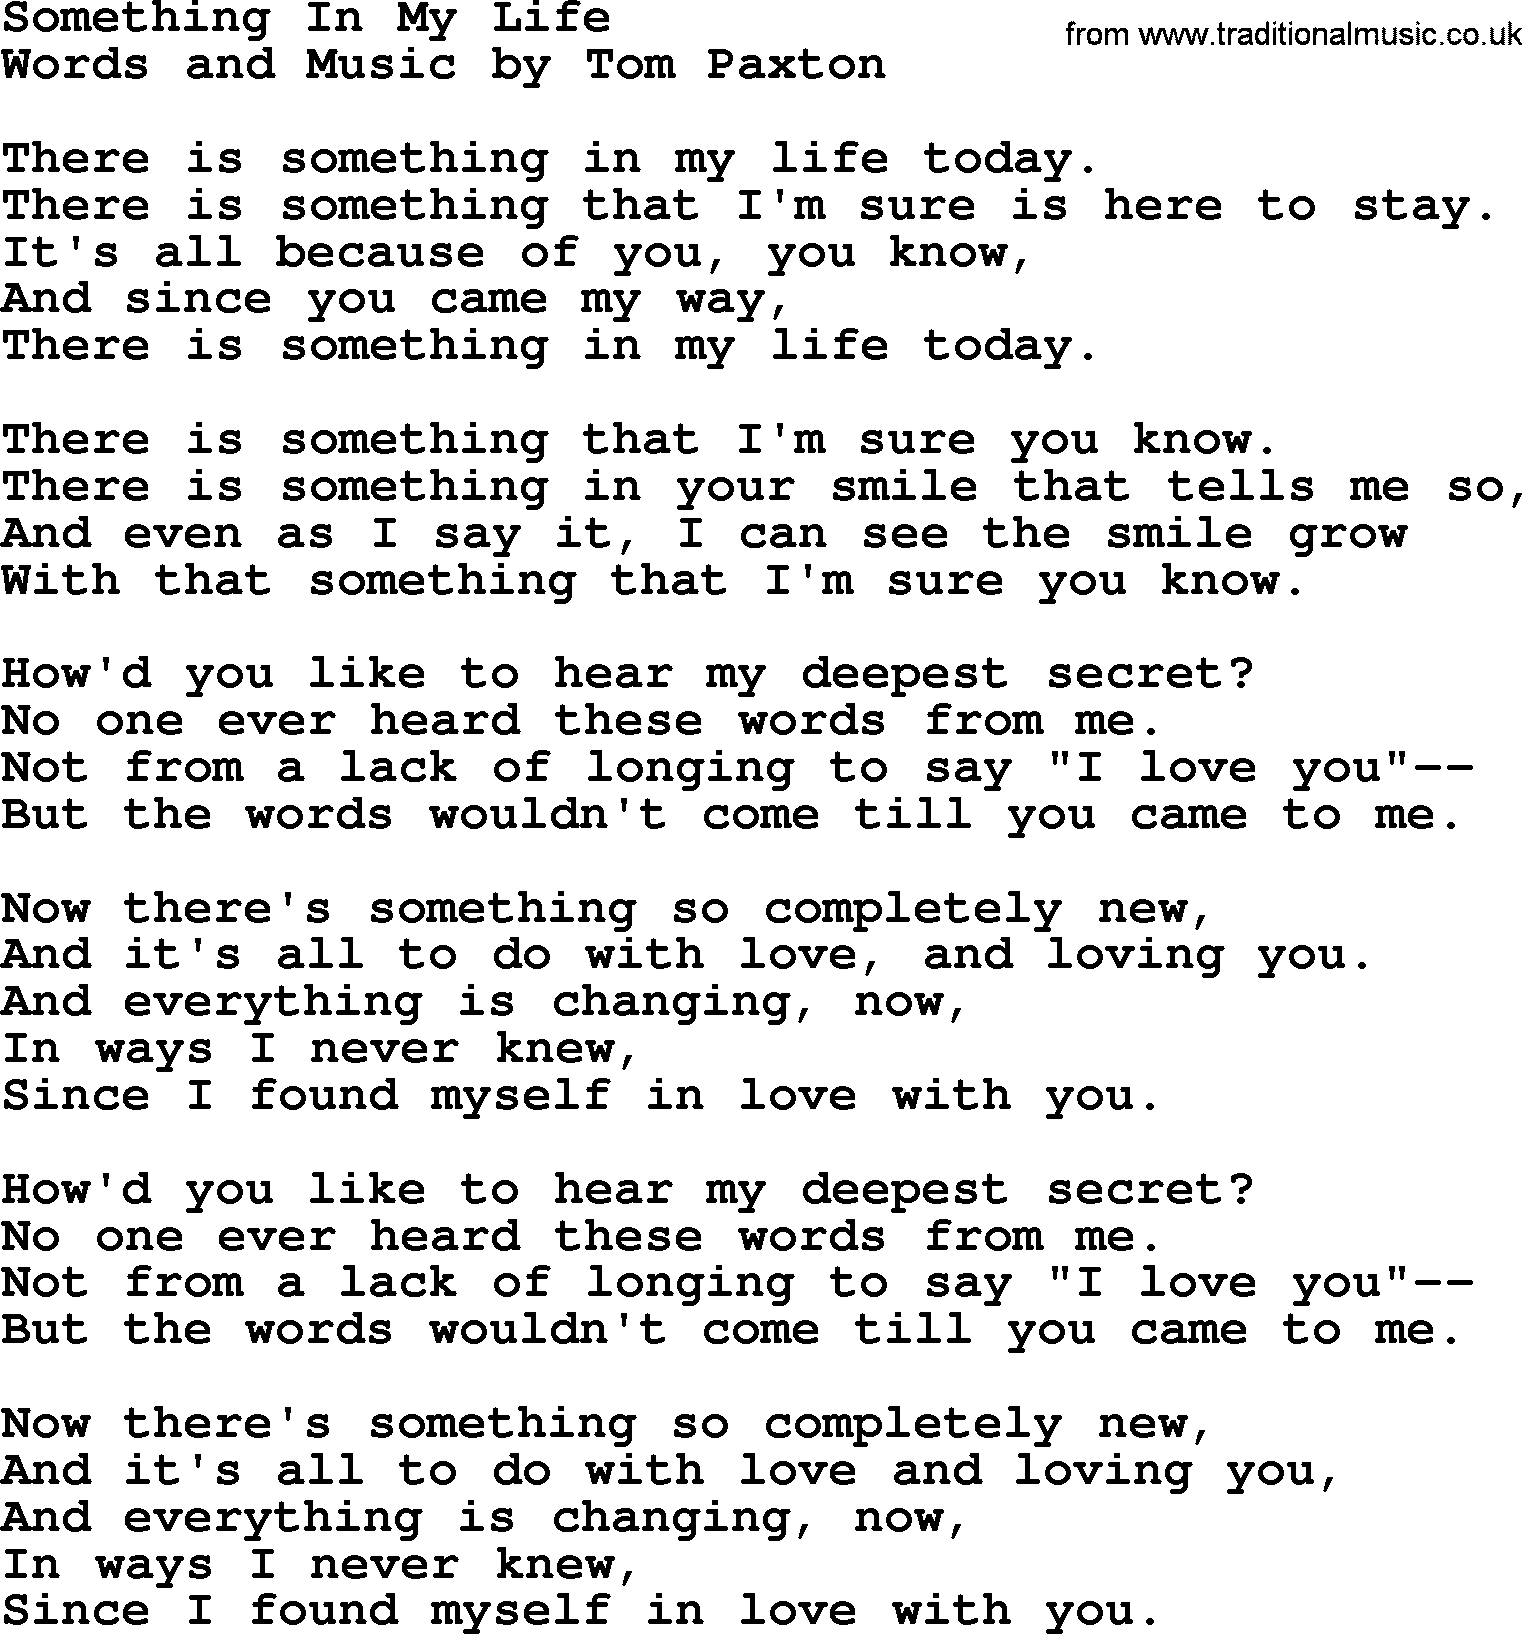 Tom Paxton song: Something In My Life, lyrics